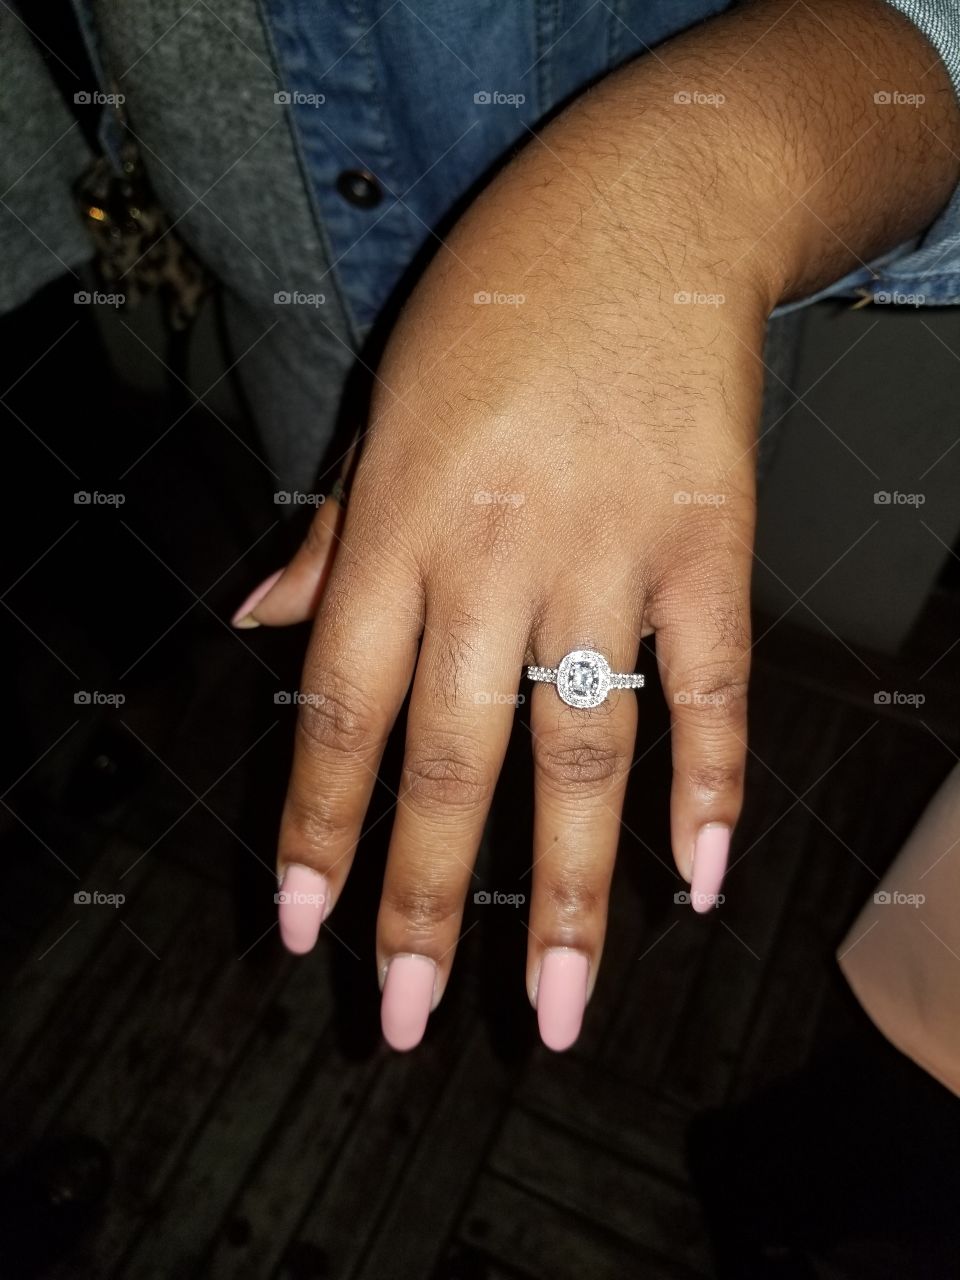 She Said Yes!